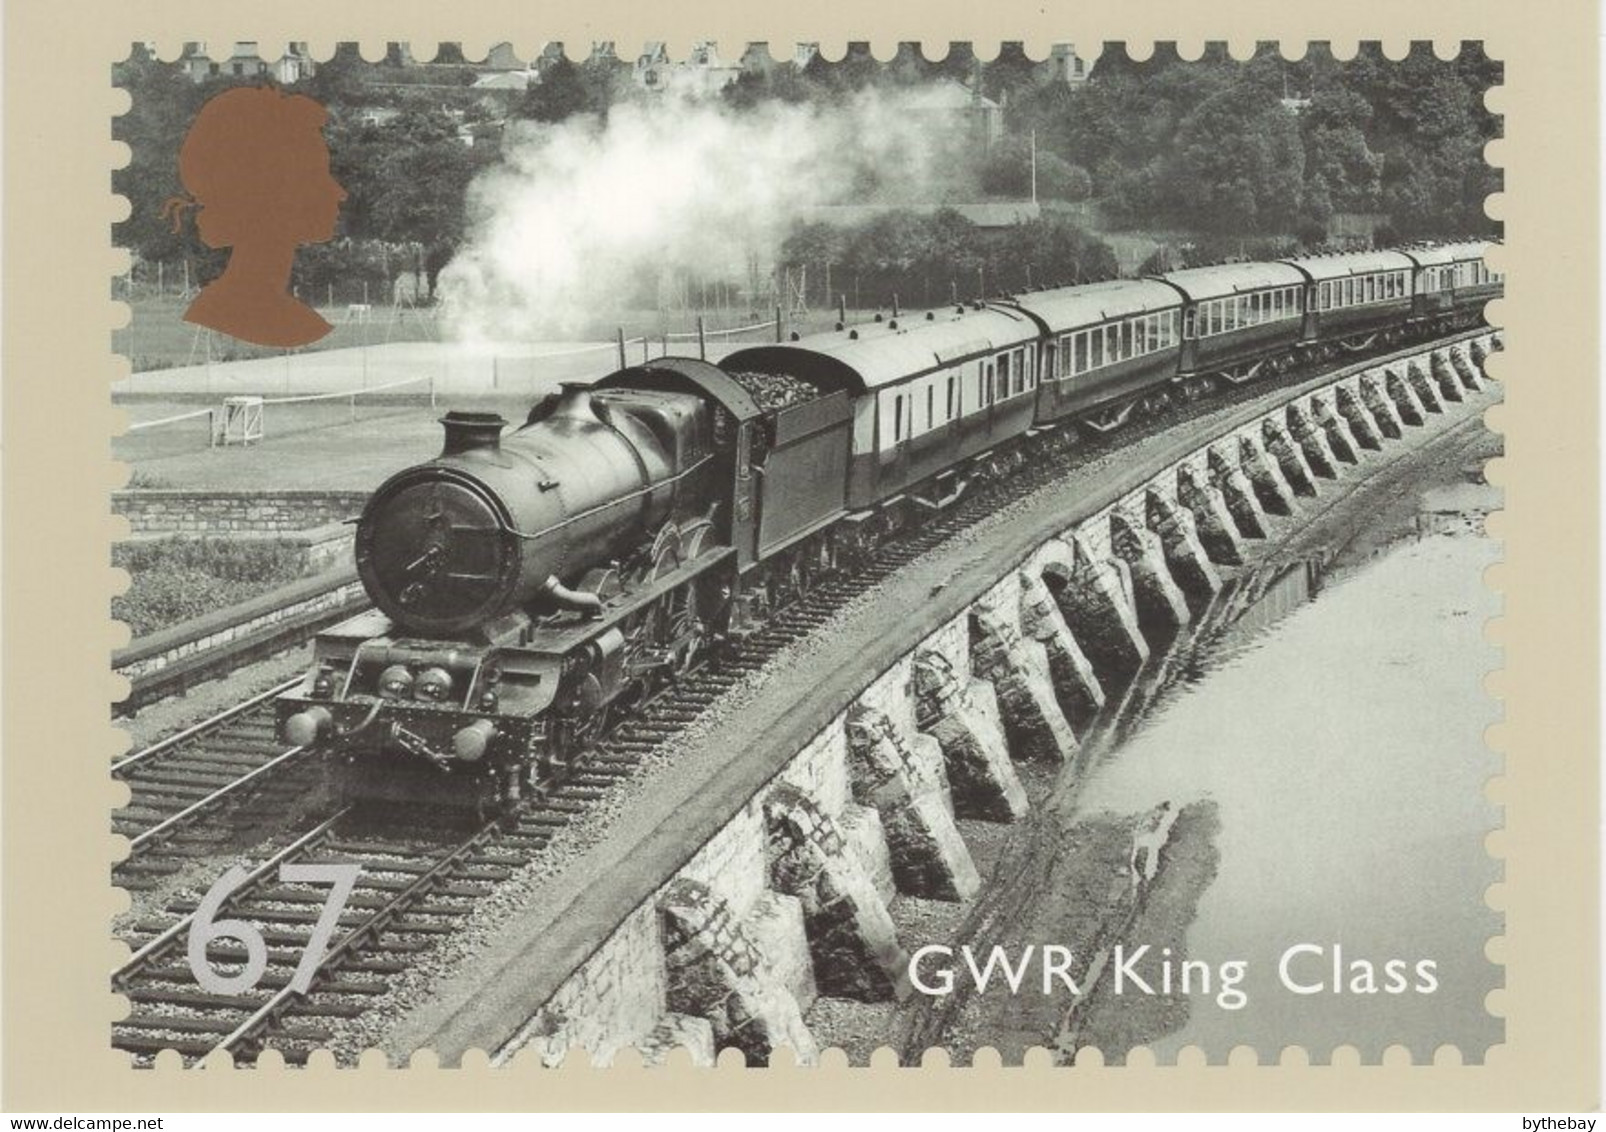 Great Britain 2010 PHQ Card Sc 2829 67p GWR King Class Locomotive - PHQ Karten